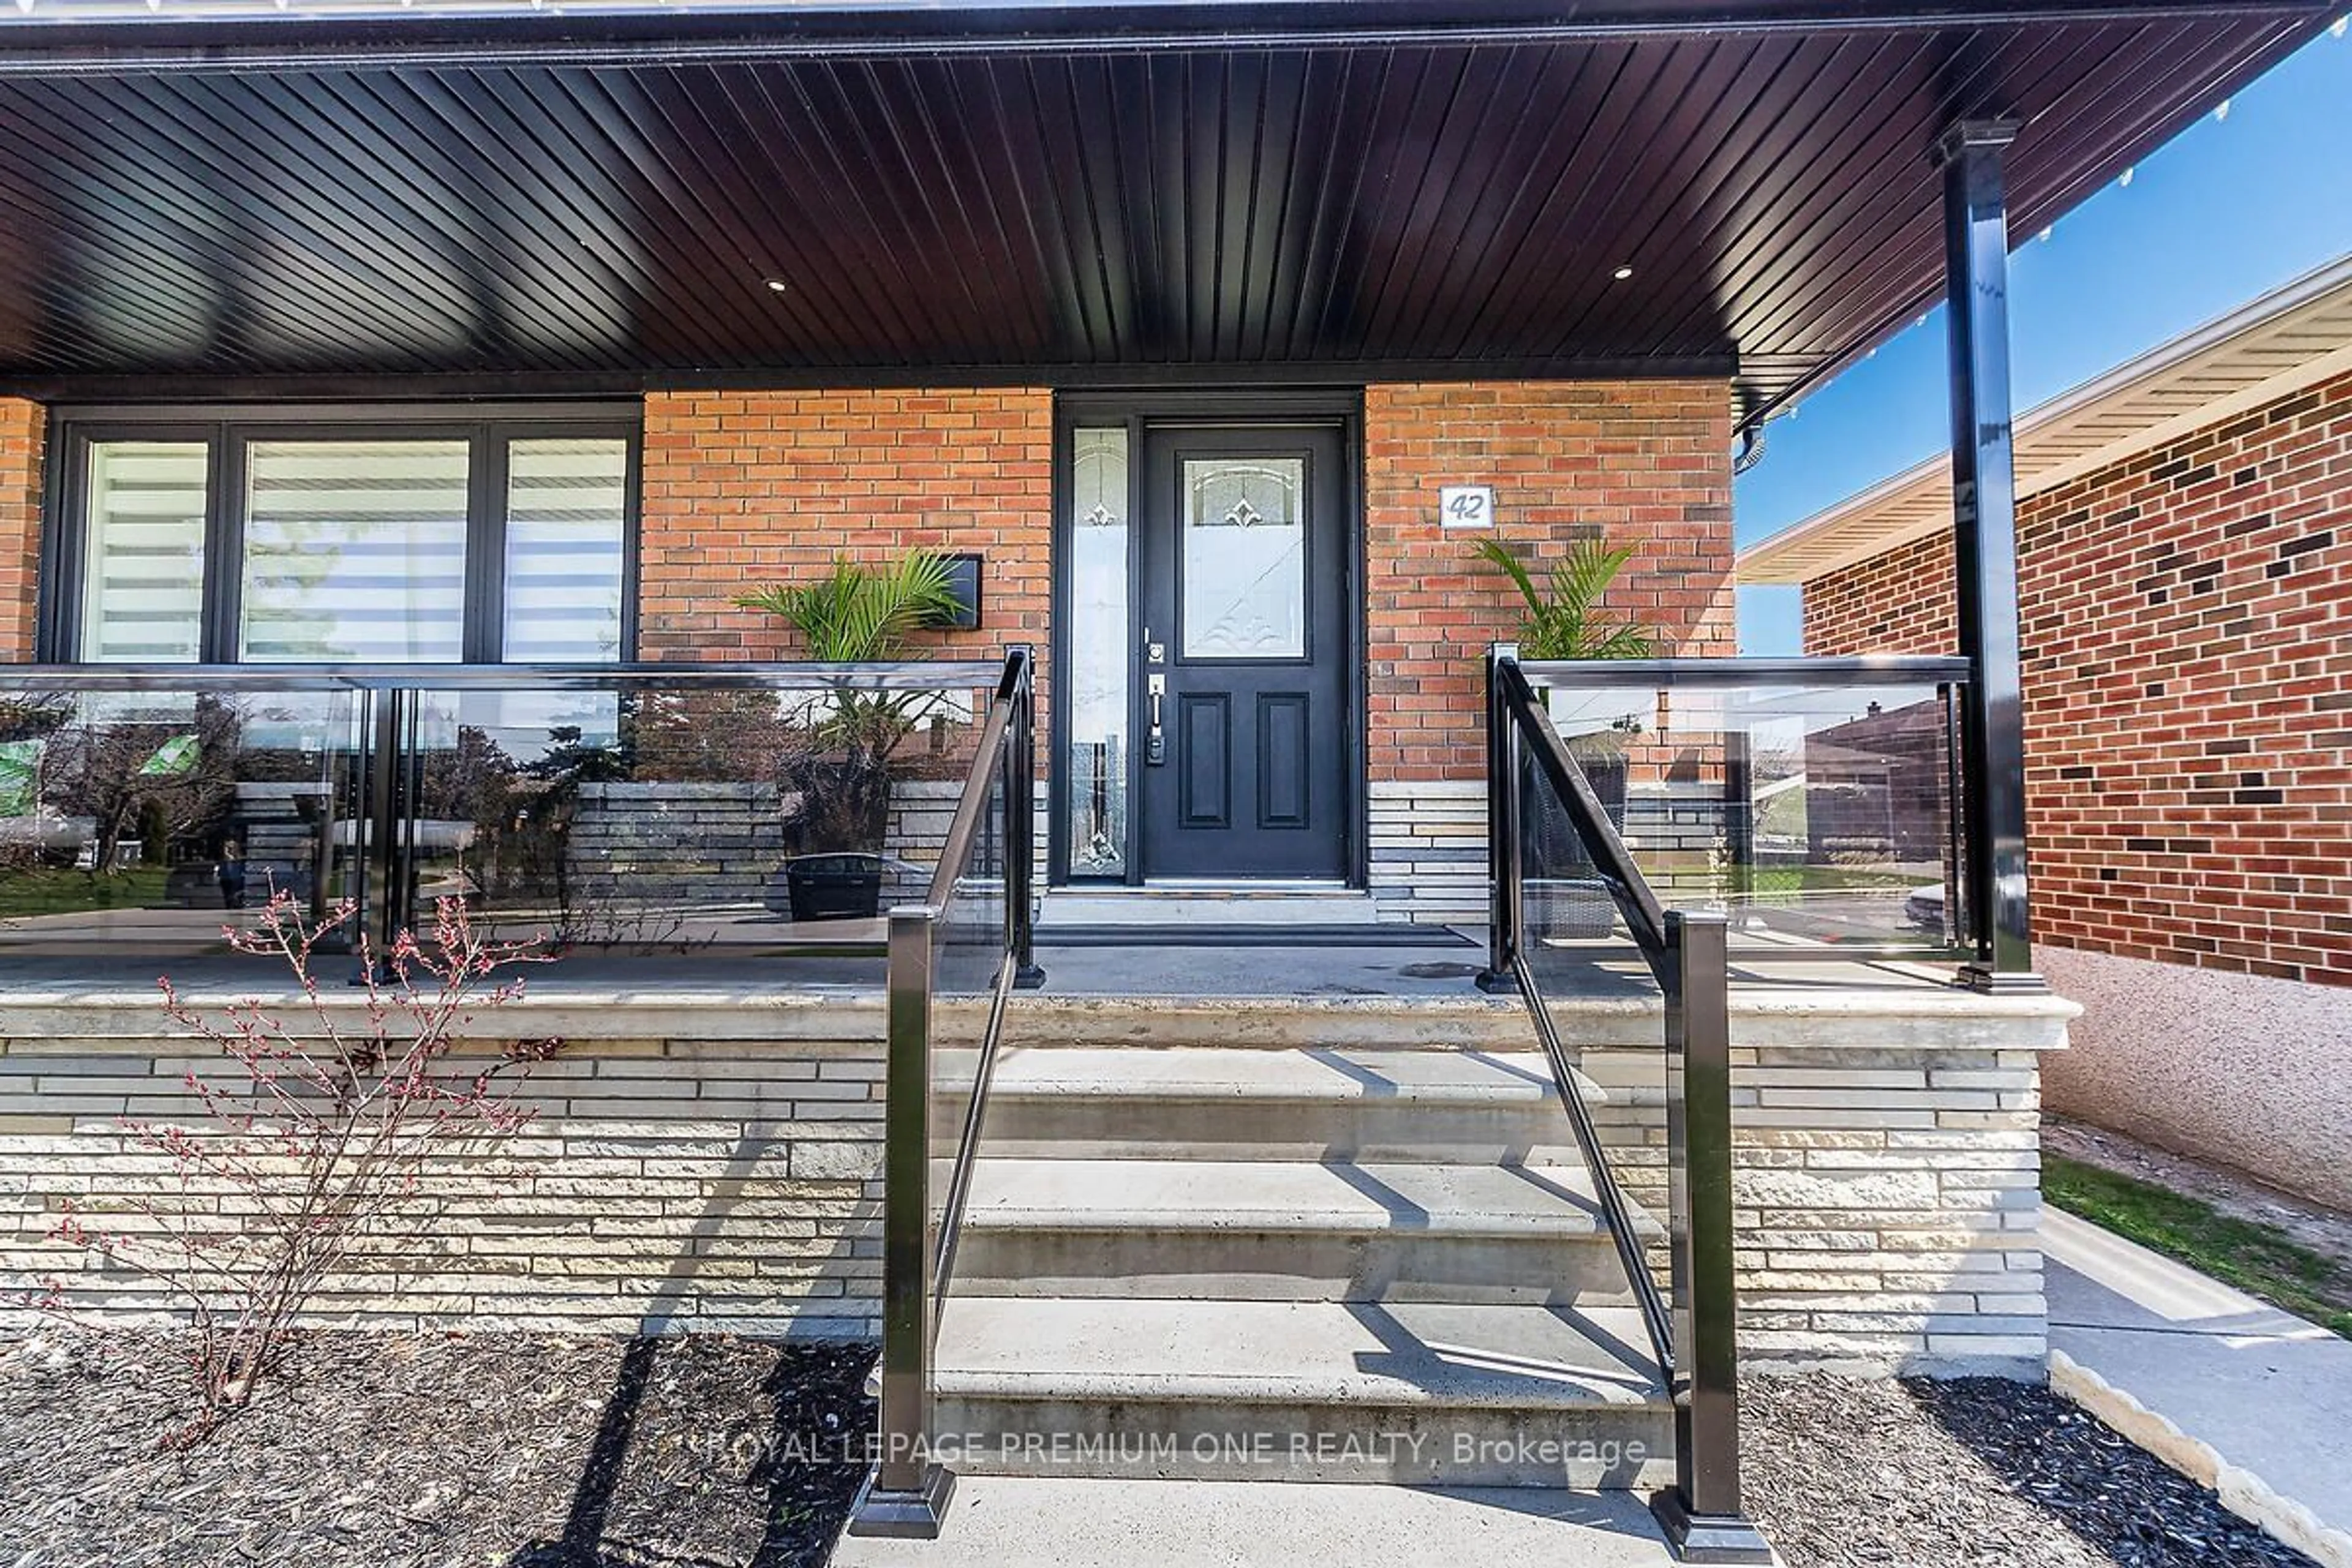 Home with brick exterior material for 42 Mangrove Rd, Toronto Ontario M6L 2A3